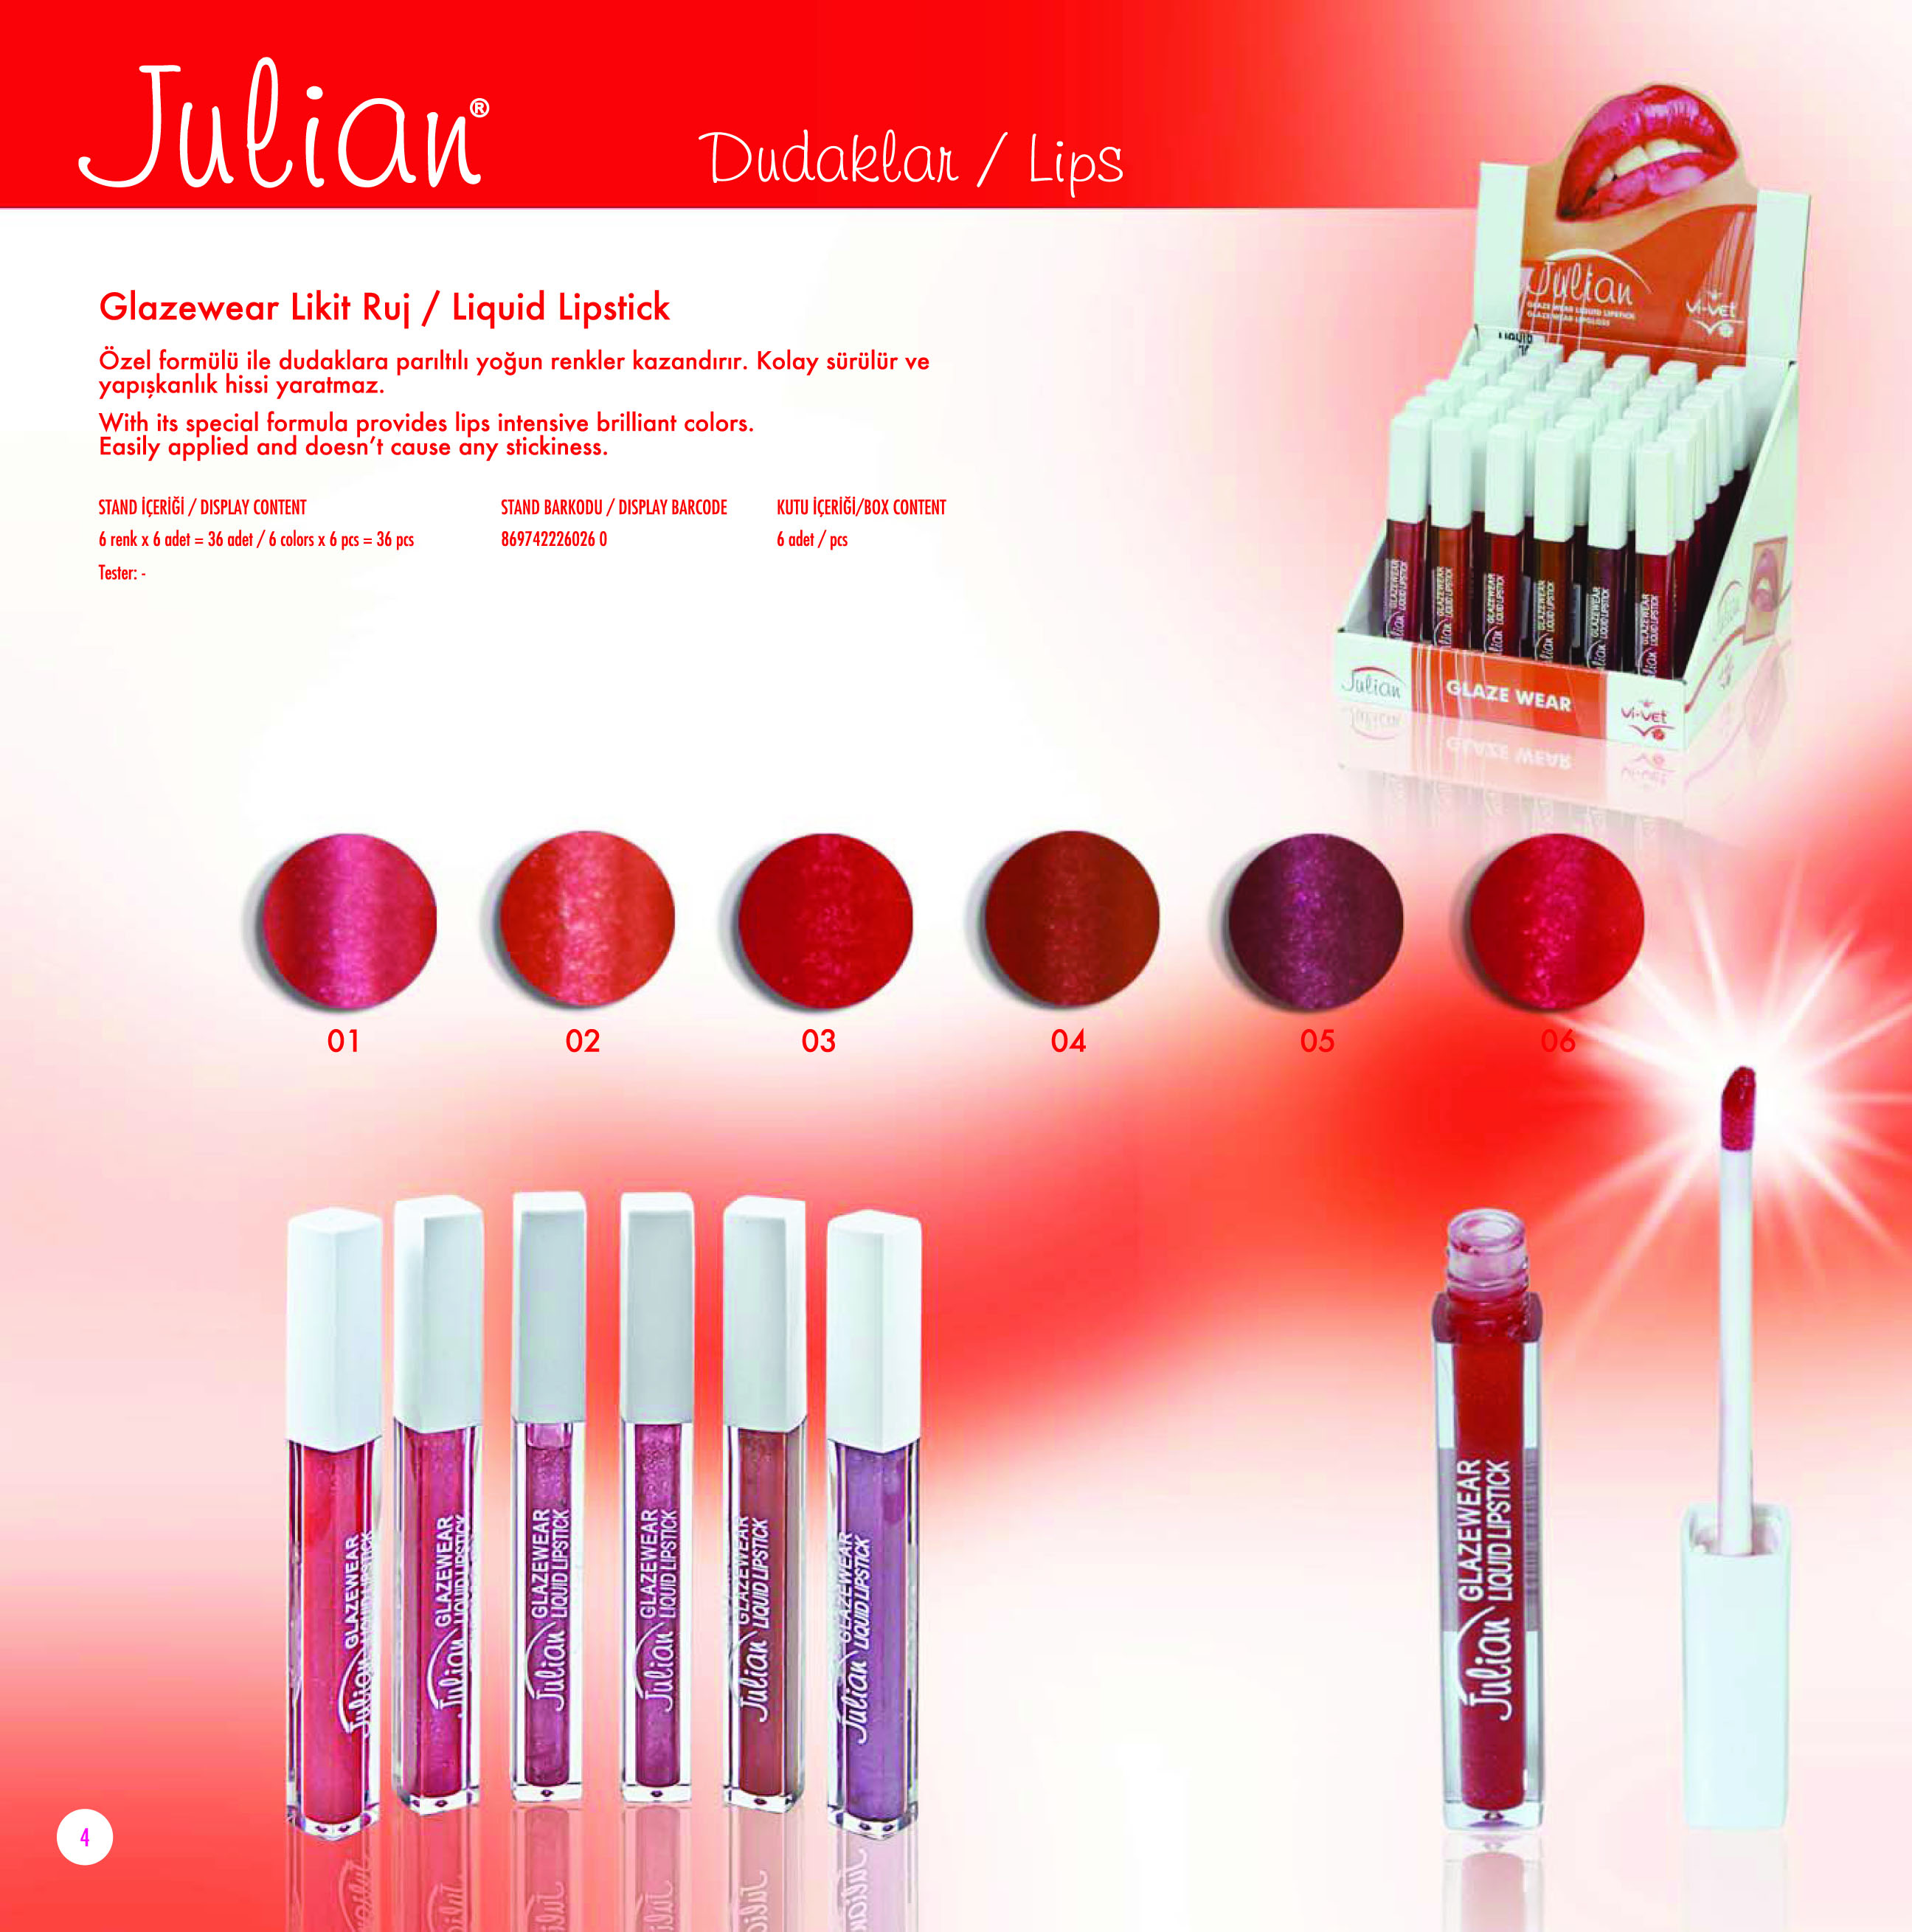 Julian Liquid Lipstick